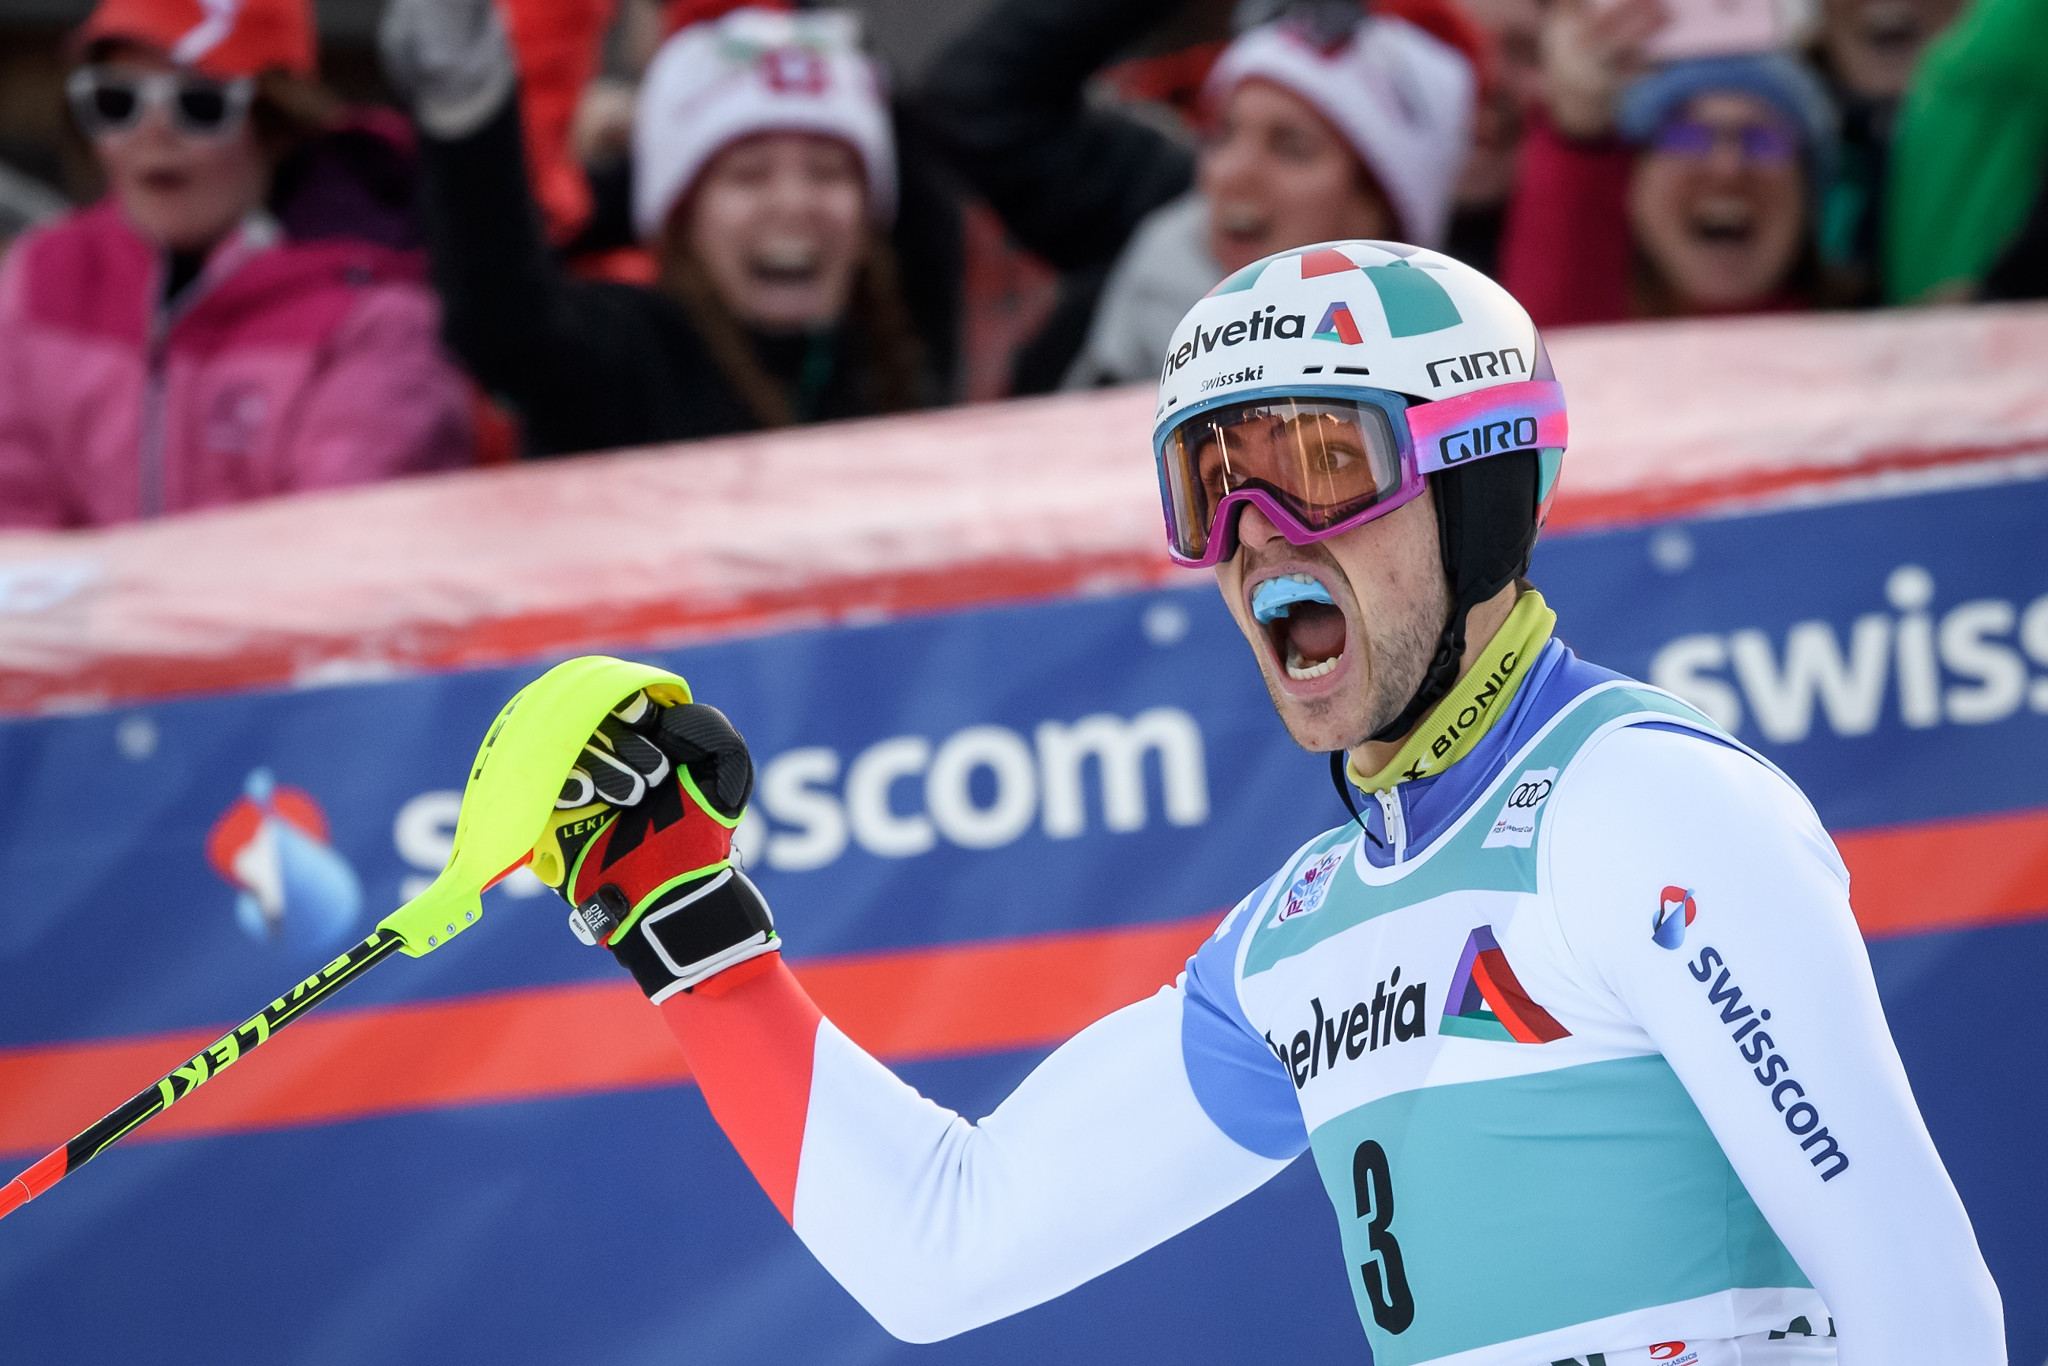 Yule earns second successive FIS Alpine Ski World Cup slalom win in Adelboden